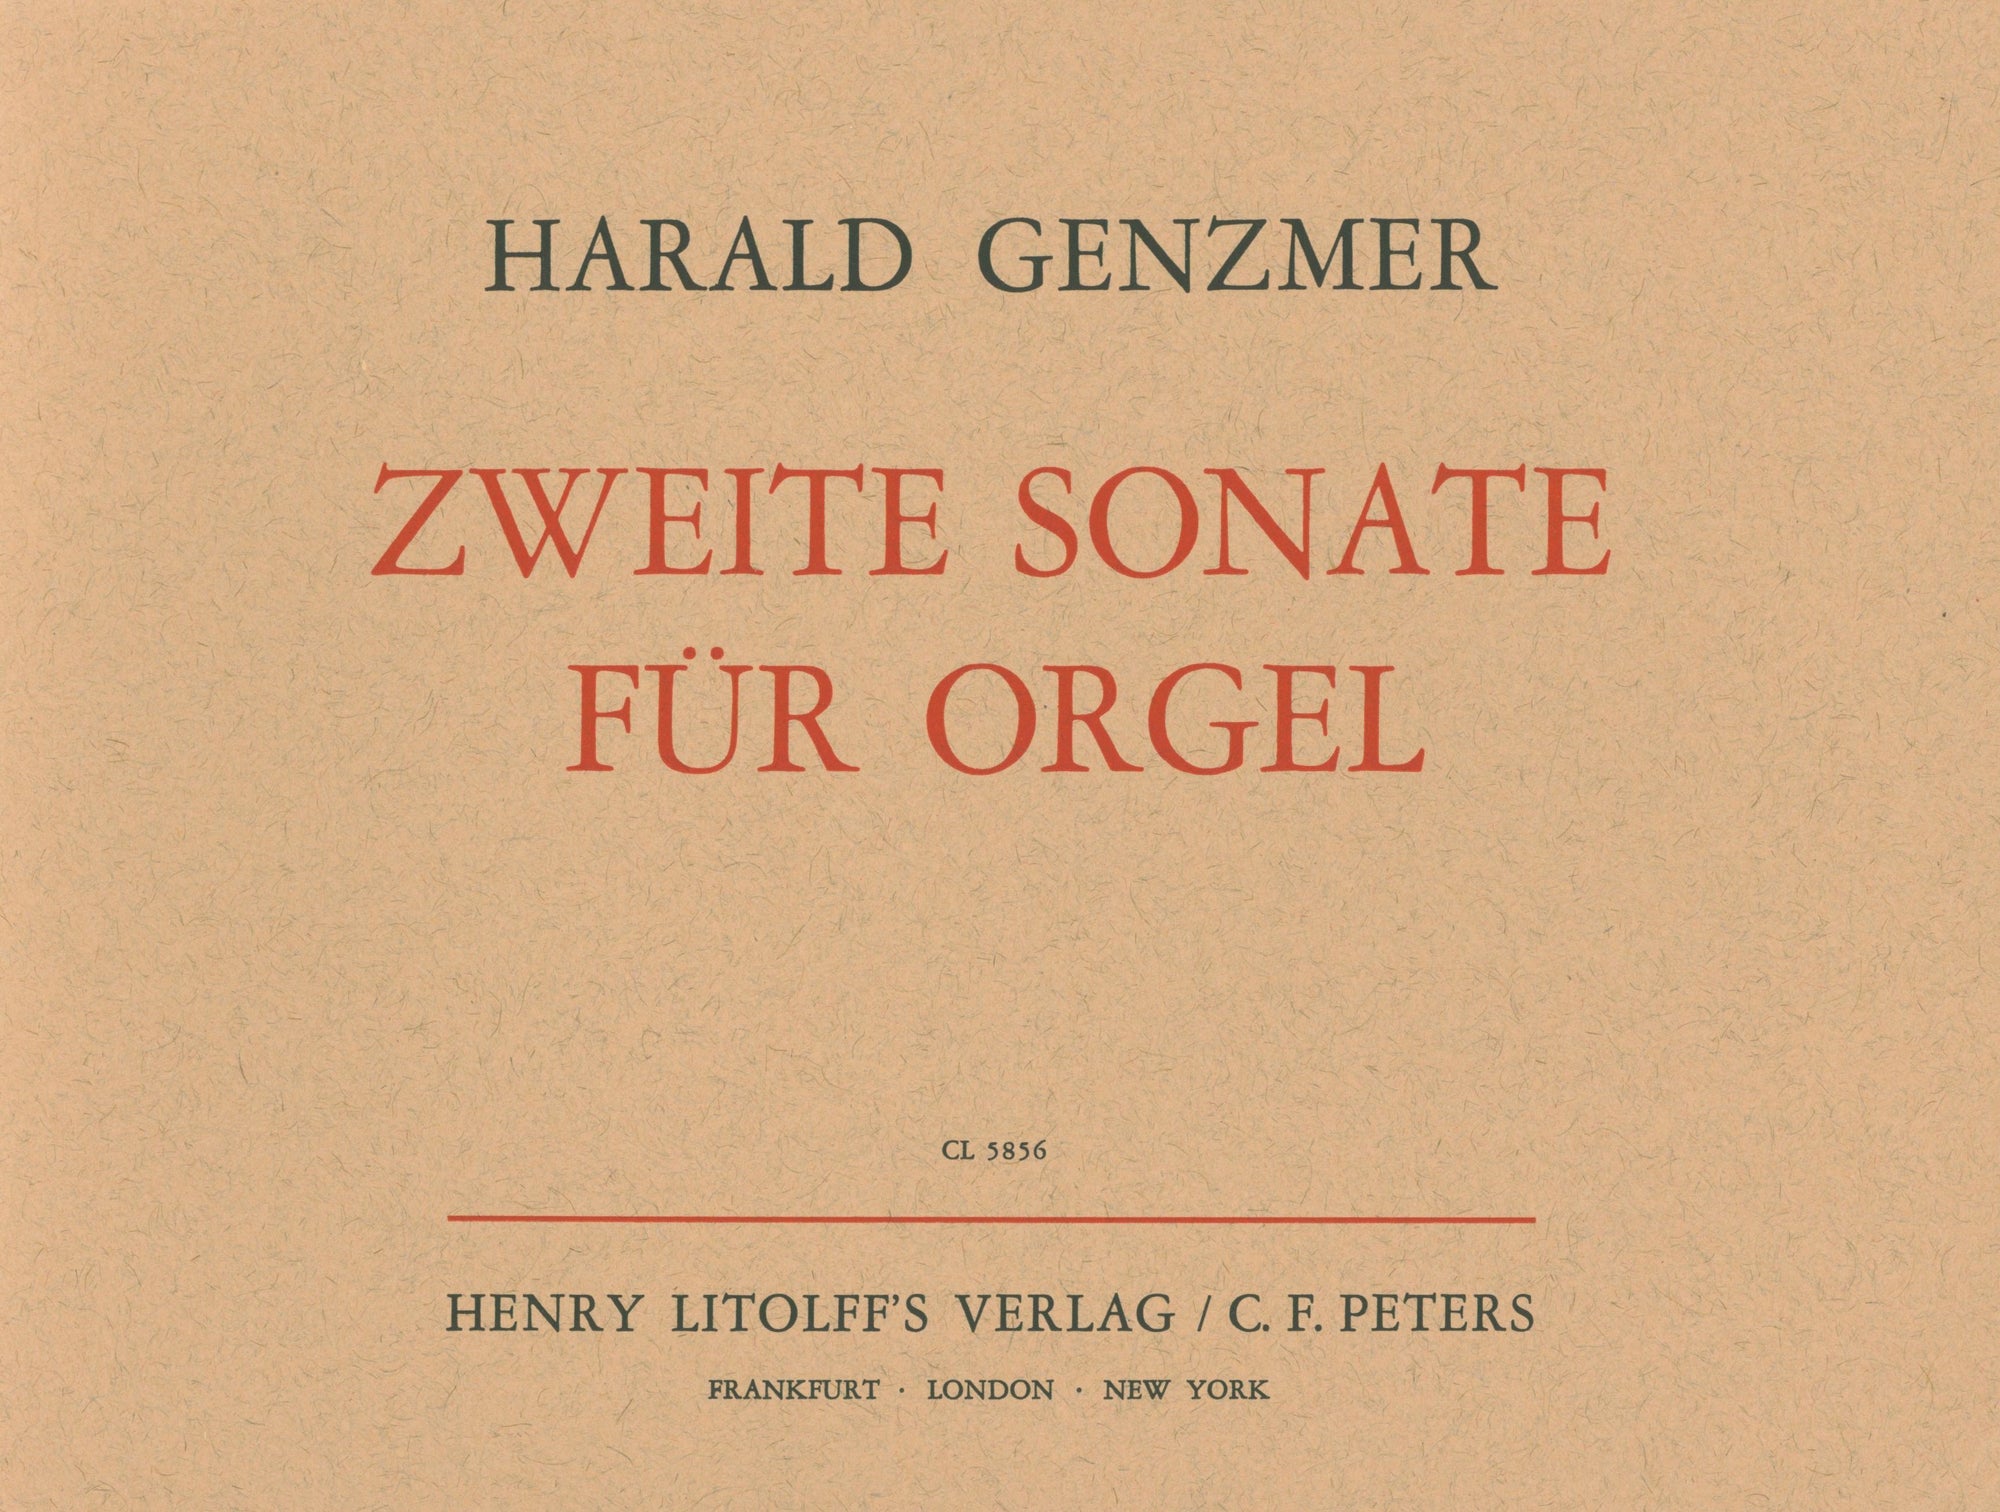 Genzmer: Organ Sonata No. 2